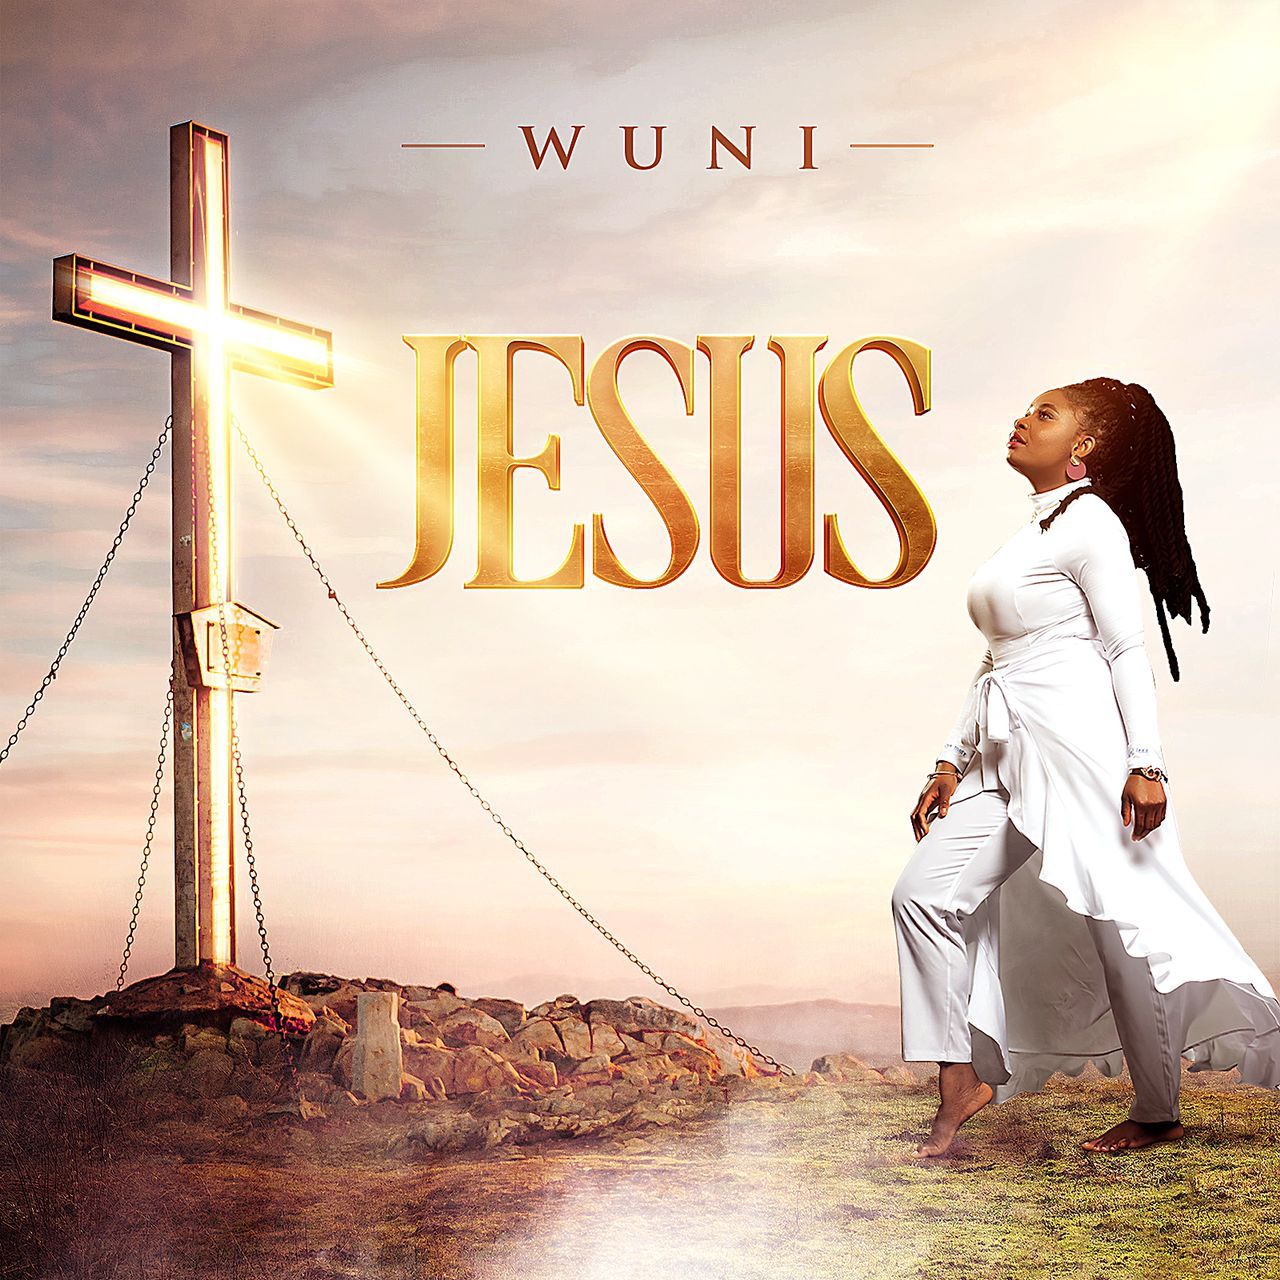 WUNI - Jesus